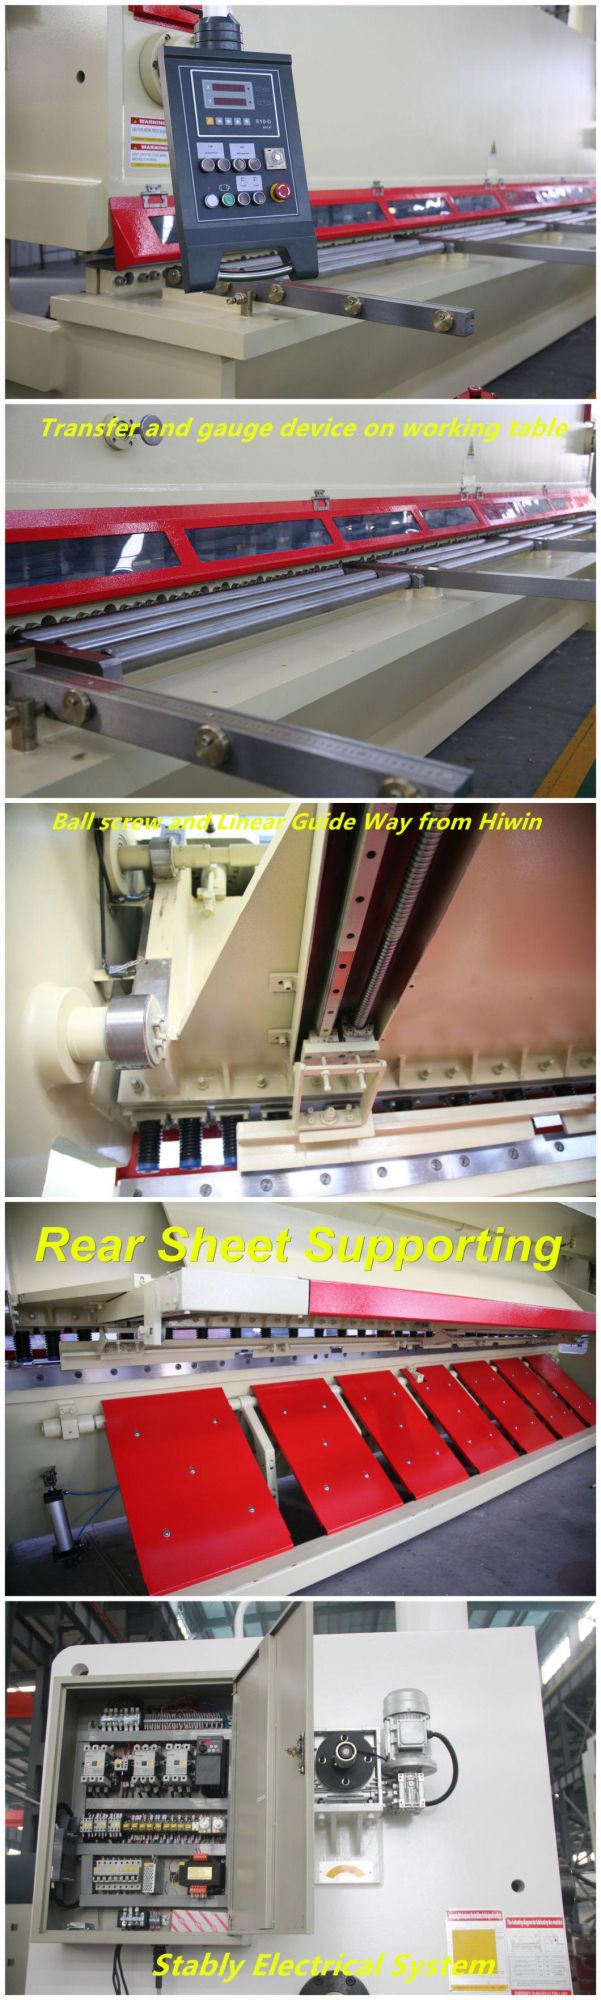 Mechanical Guillotine Machine From Anhui Yawei with Ahyw Logo for Metal Sheet Cutting